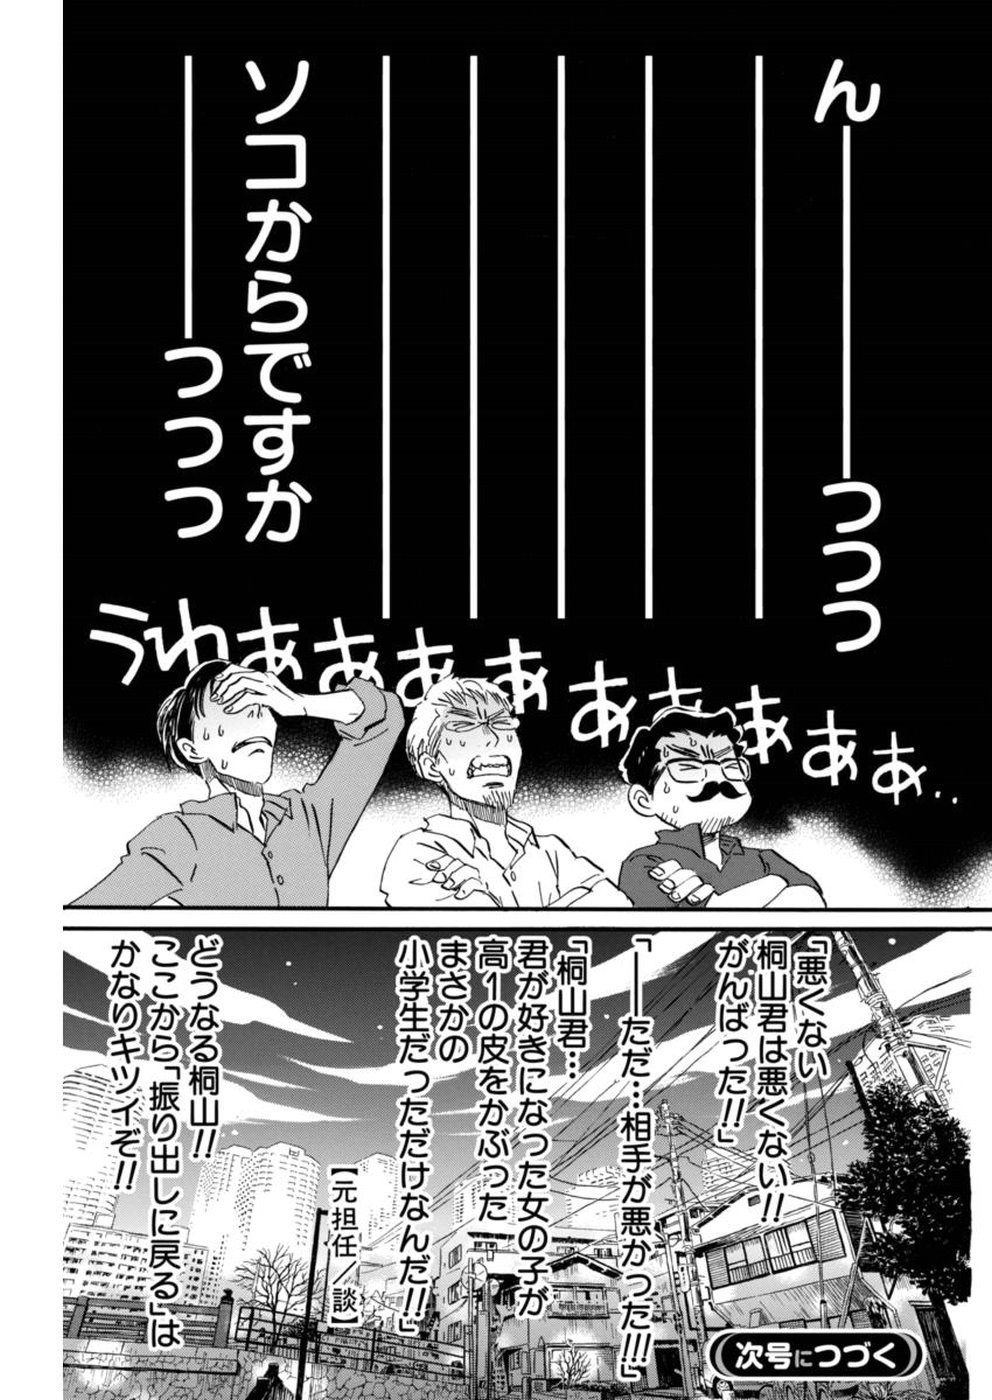 3 Gatsu no Lion - Chapter 147 - Page 11